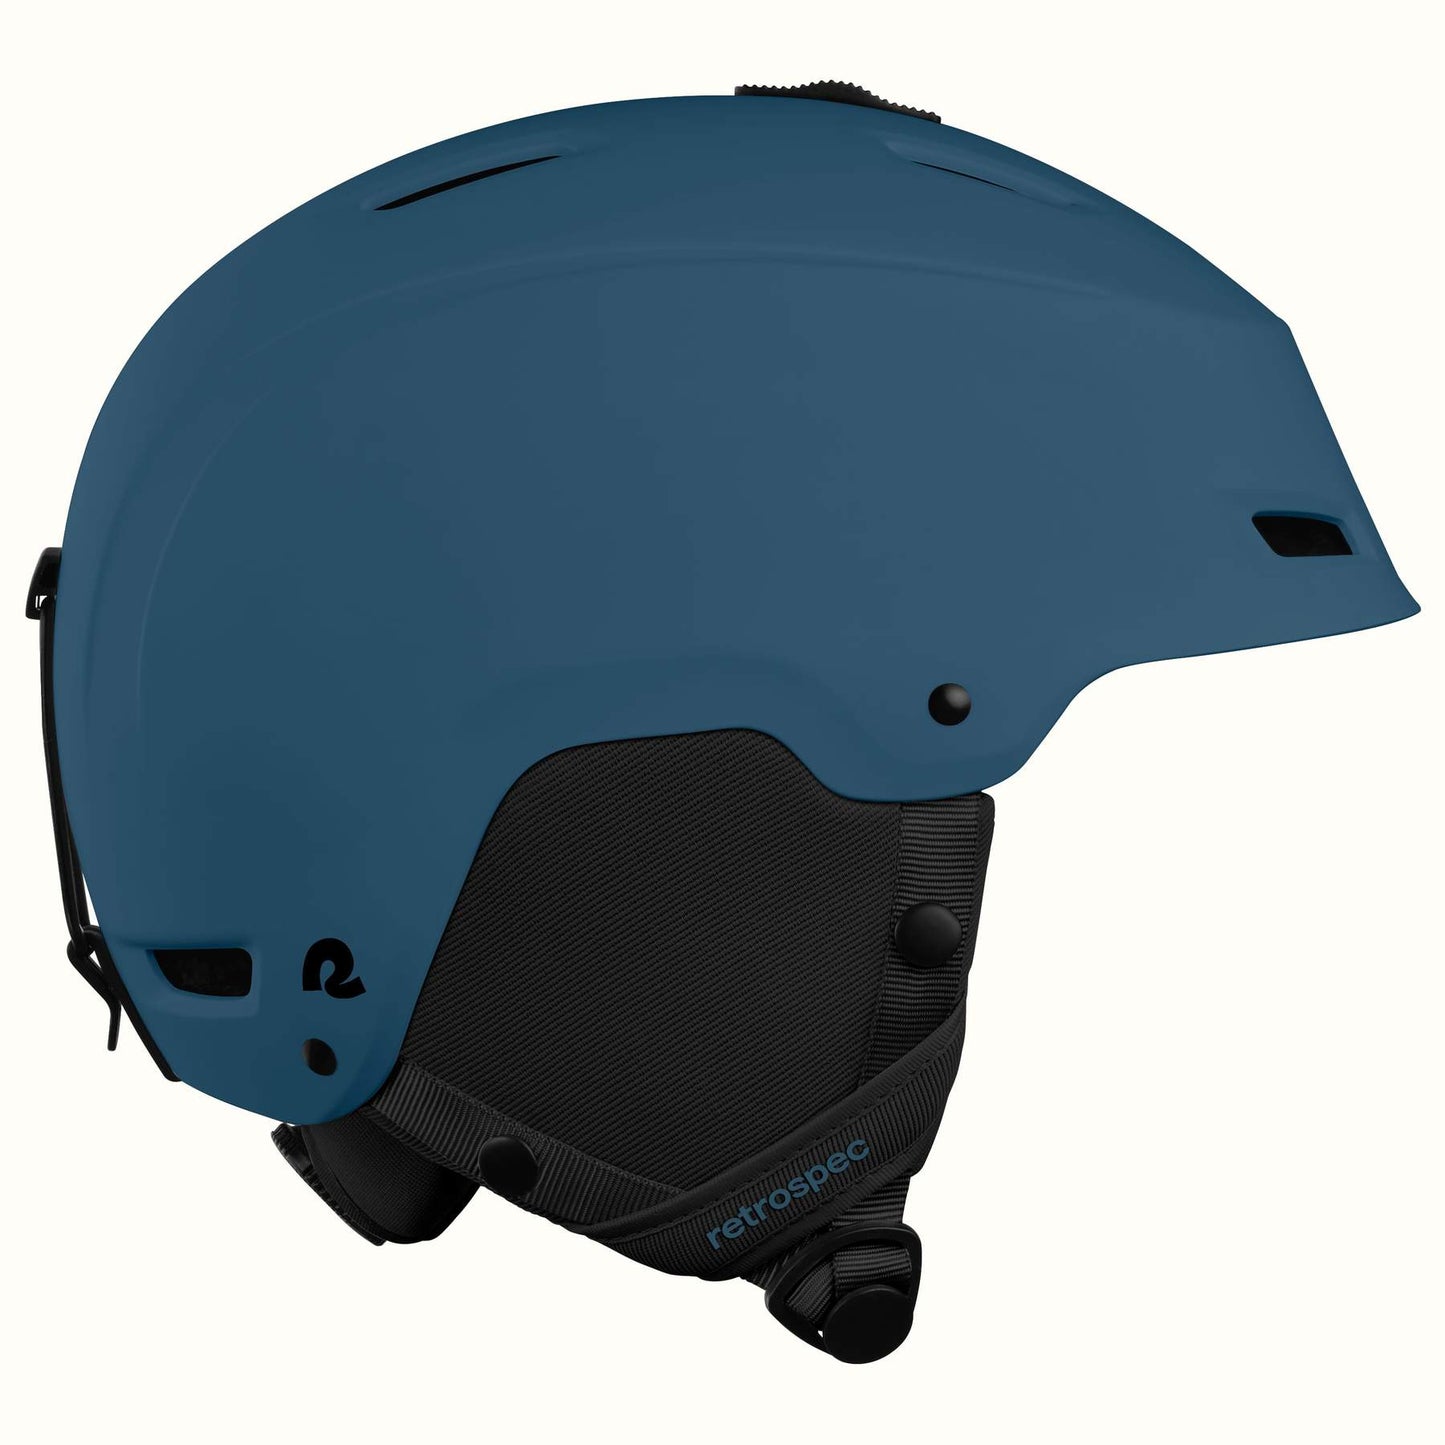 Retrospec Zephyr Snowboard Ski Helmet Various sizes and colors, NEW